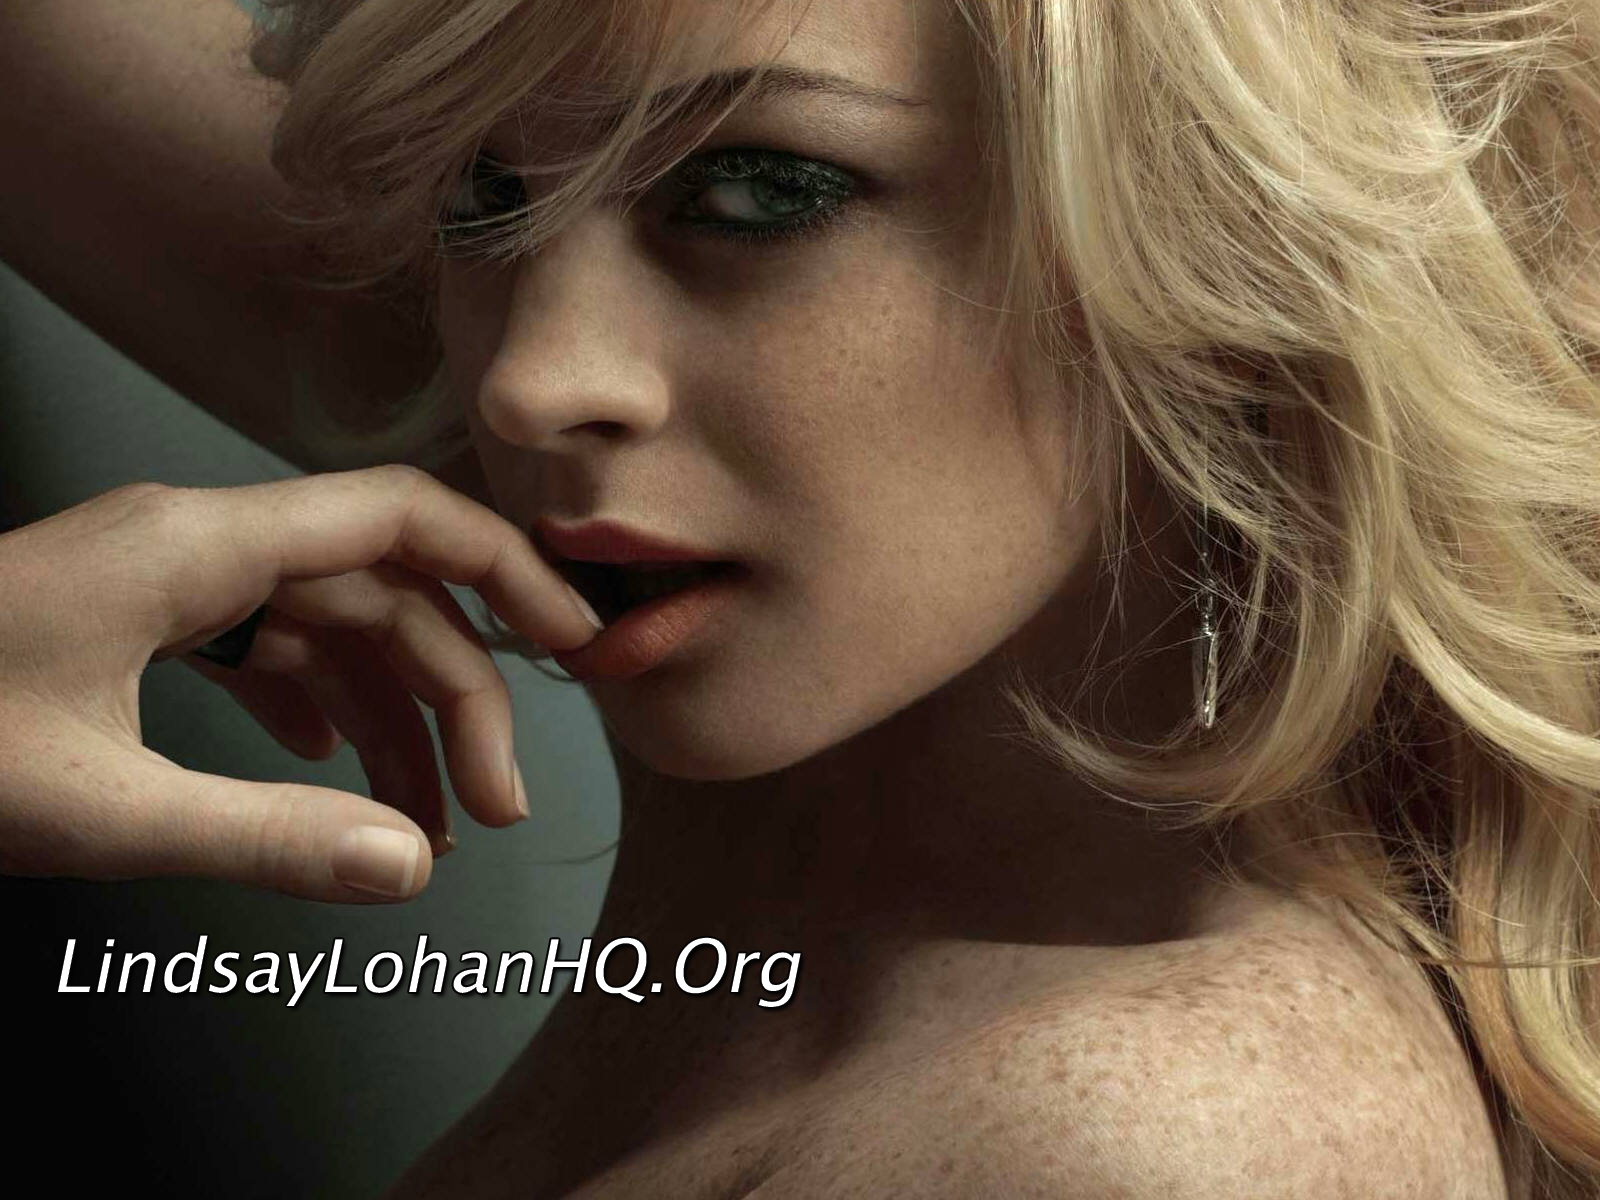 [056 - Lindsay Lohan.jpg]